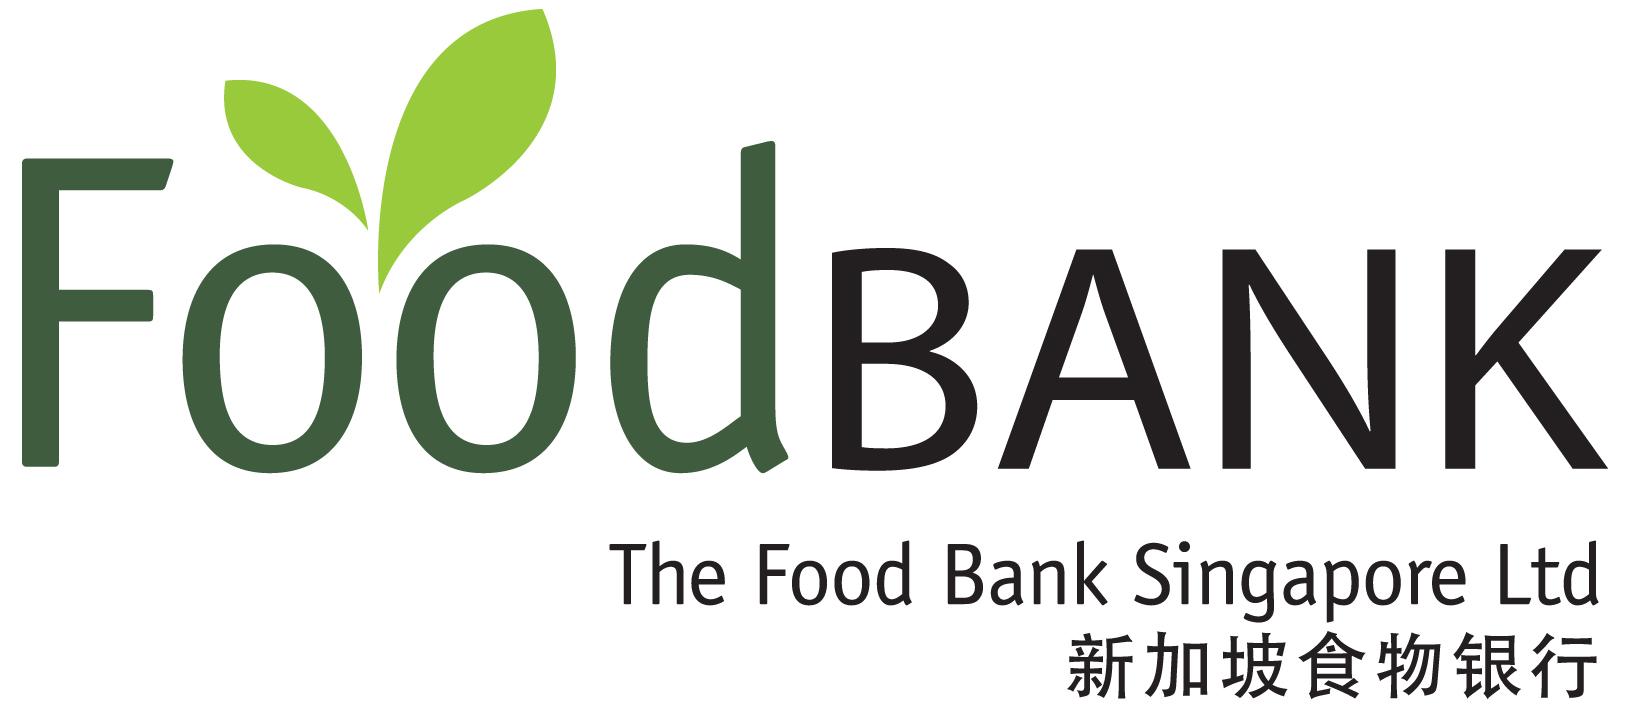 Company logo for The Food Bank Singapore Ltd.